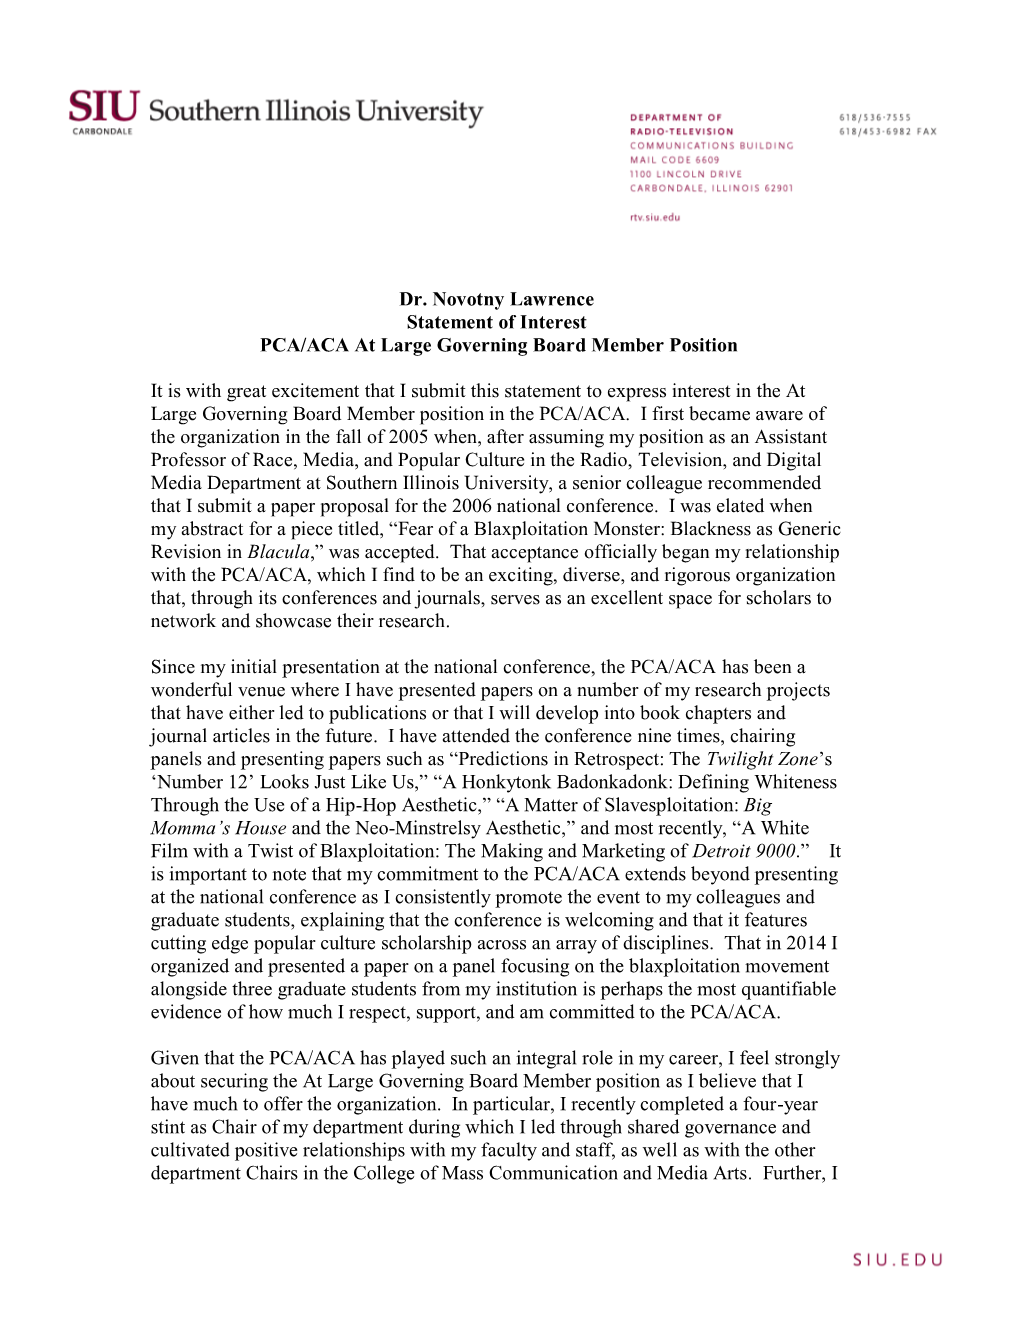 Dr. Novotny Lawrence Statement of Interest PCA/ACA at Large Governing Board Member Position